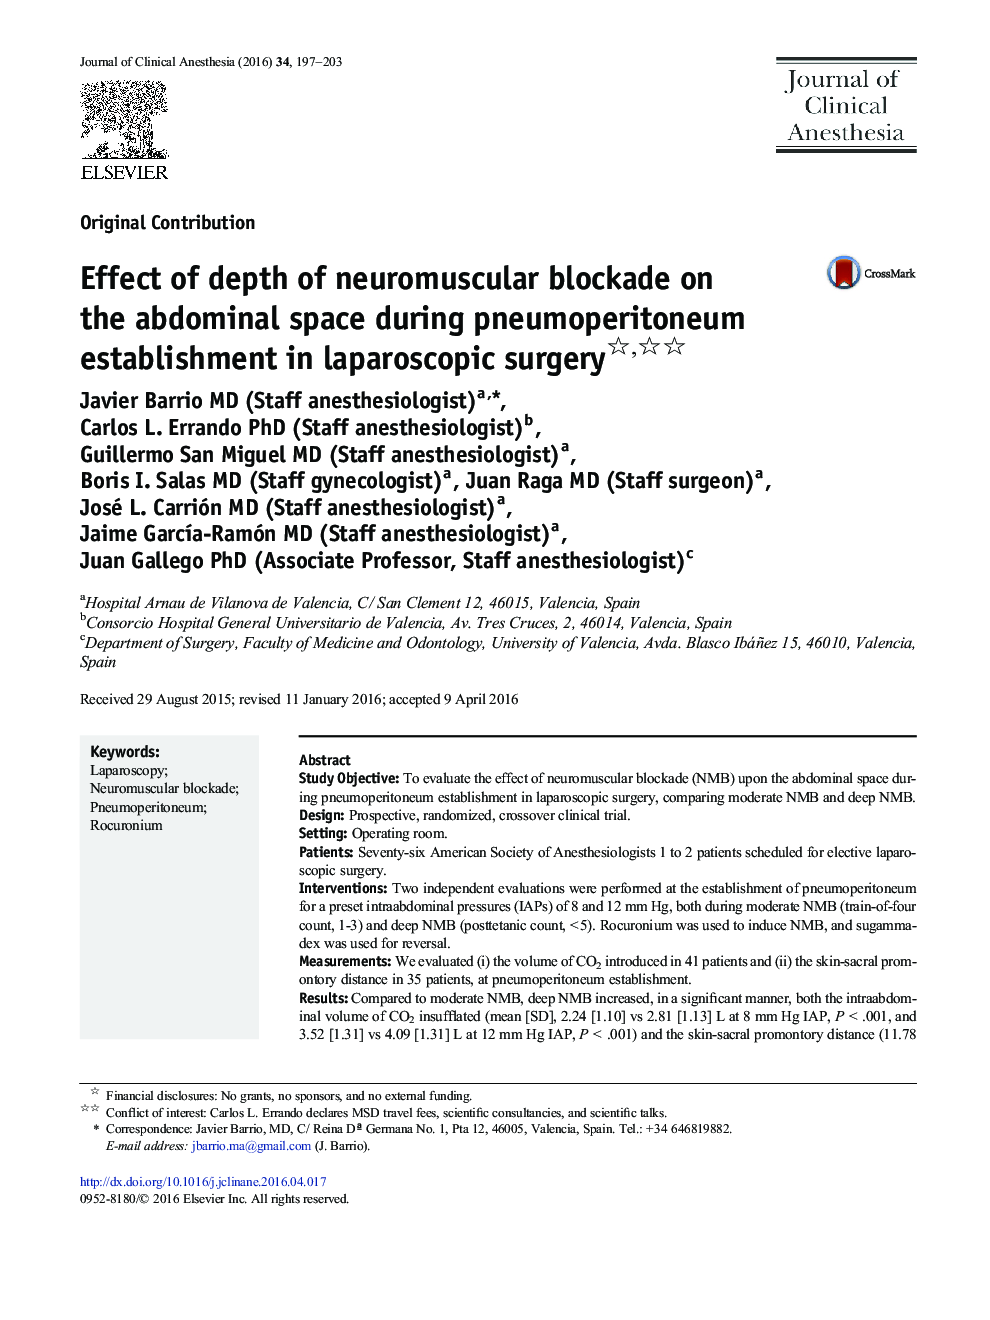 Original ContributionEffect of depth of neuromuscular blockade on the abdominal space during pneumoperitoneum establishment in laparoscopic surgery